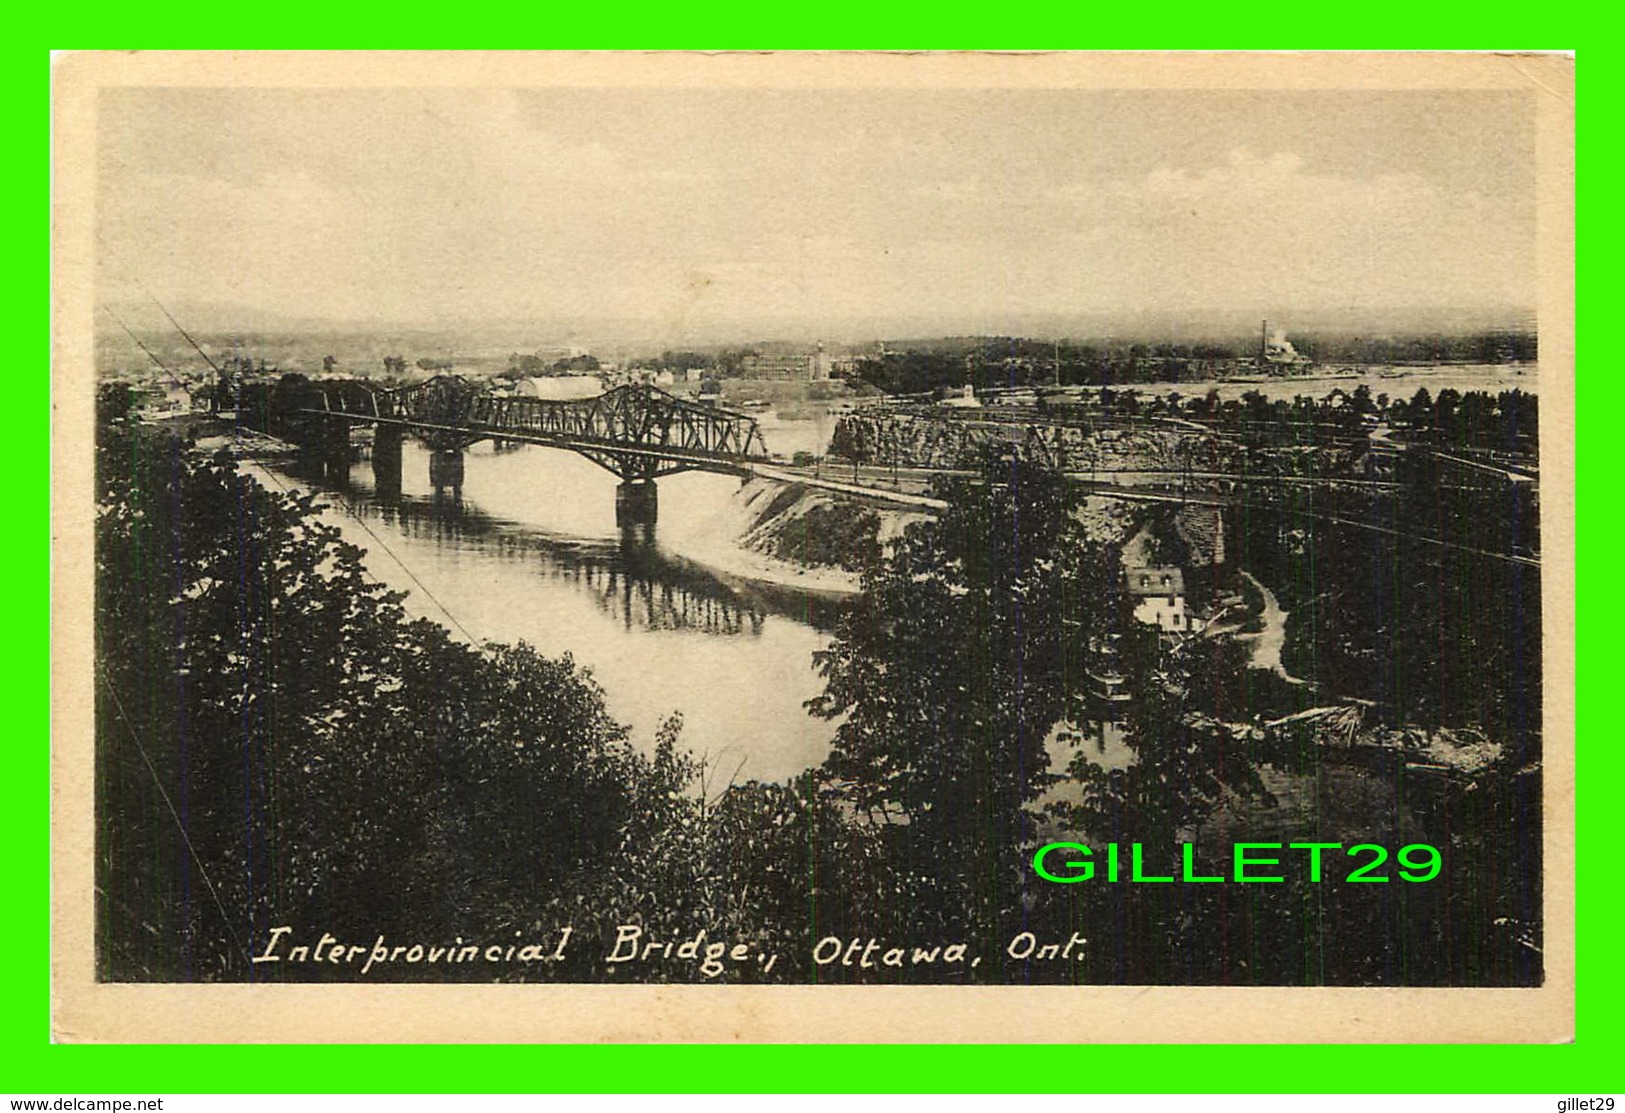 OTTAWA, ONTARIO - INTERPROVINCIAL BRIDGE - PRINTED BY THE HELIOTYPE CO LTD - - Ottawa